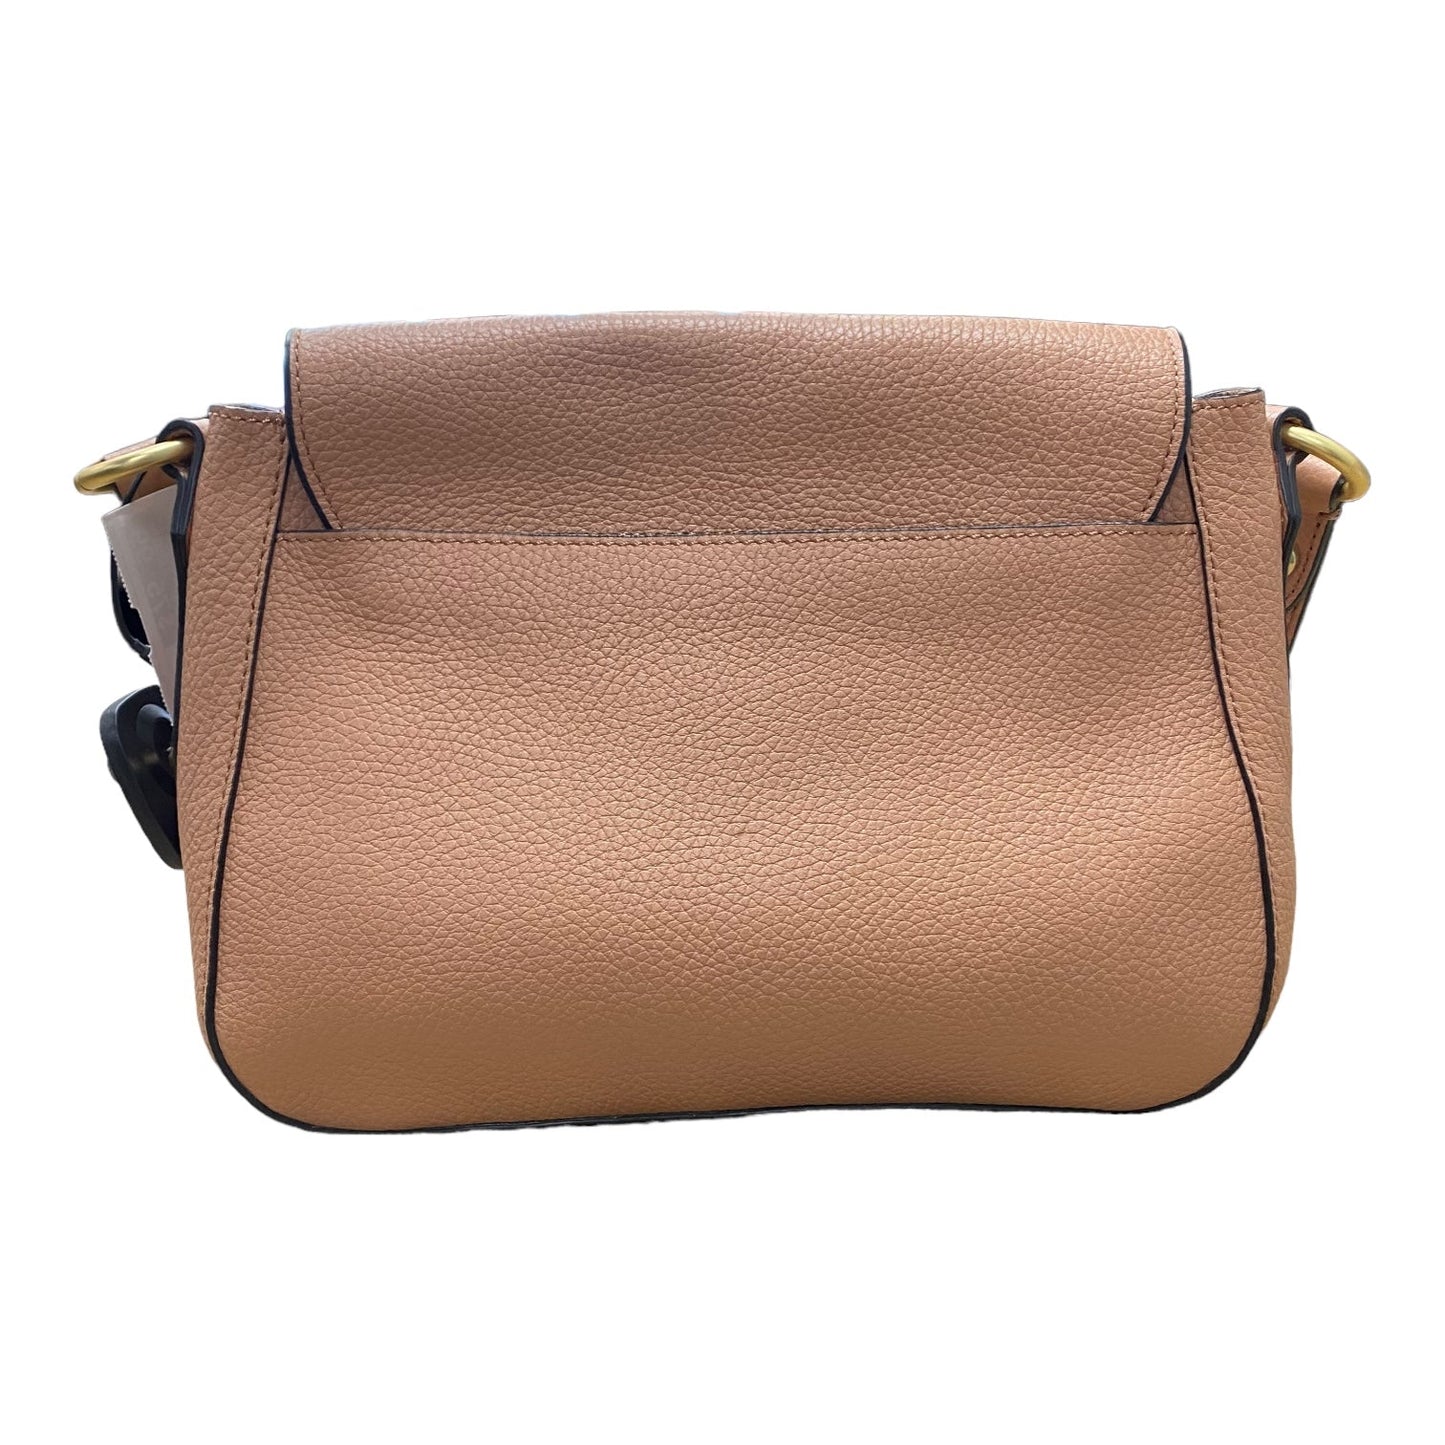 Handbag Designer By Annabel Ingal Size: Small